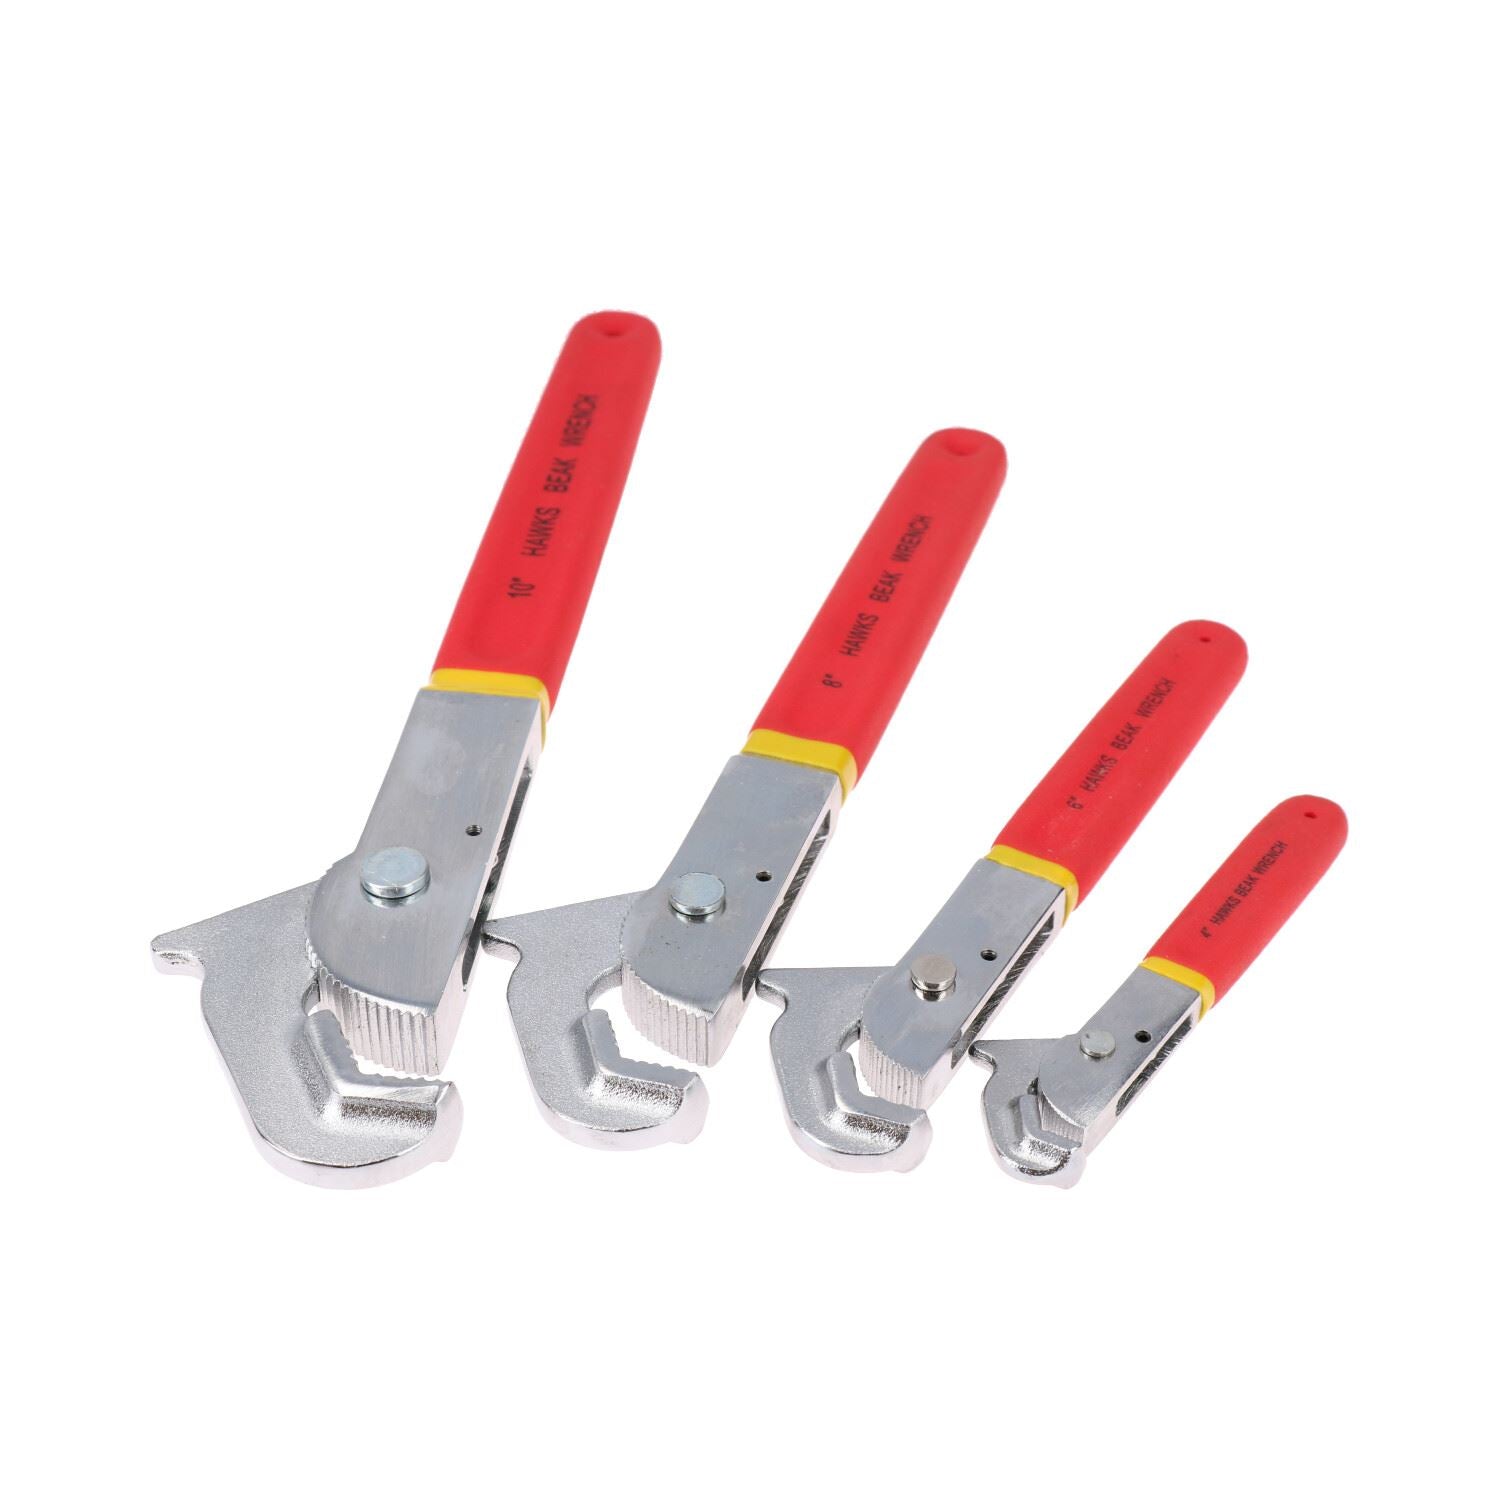 5pc Super Wrench Set Adjustable Self Adjusting Spanners 2mm – 60mm Opening